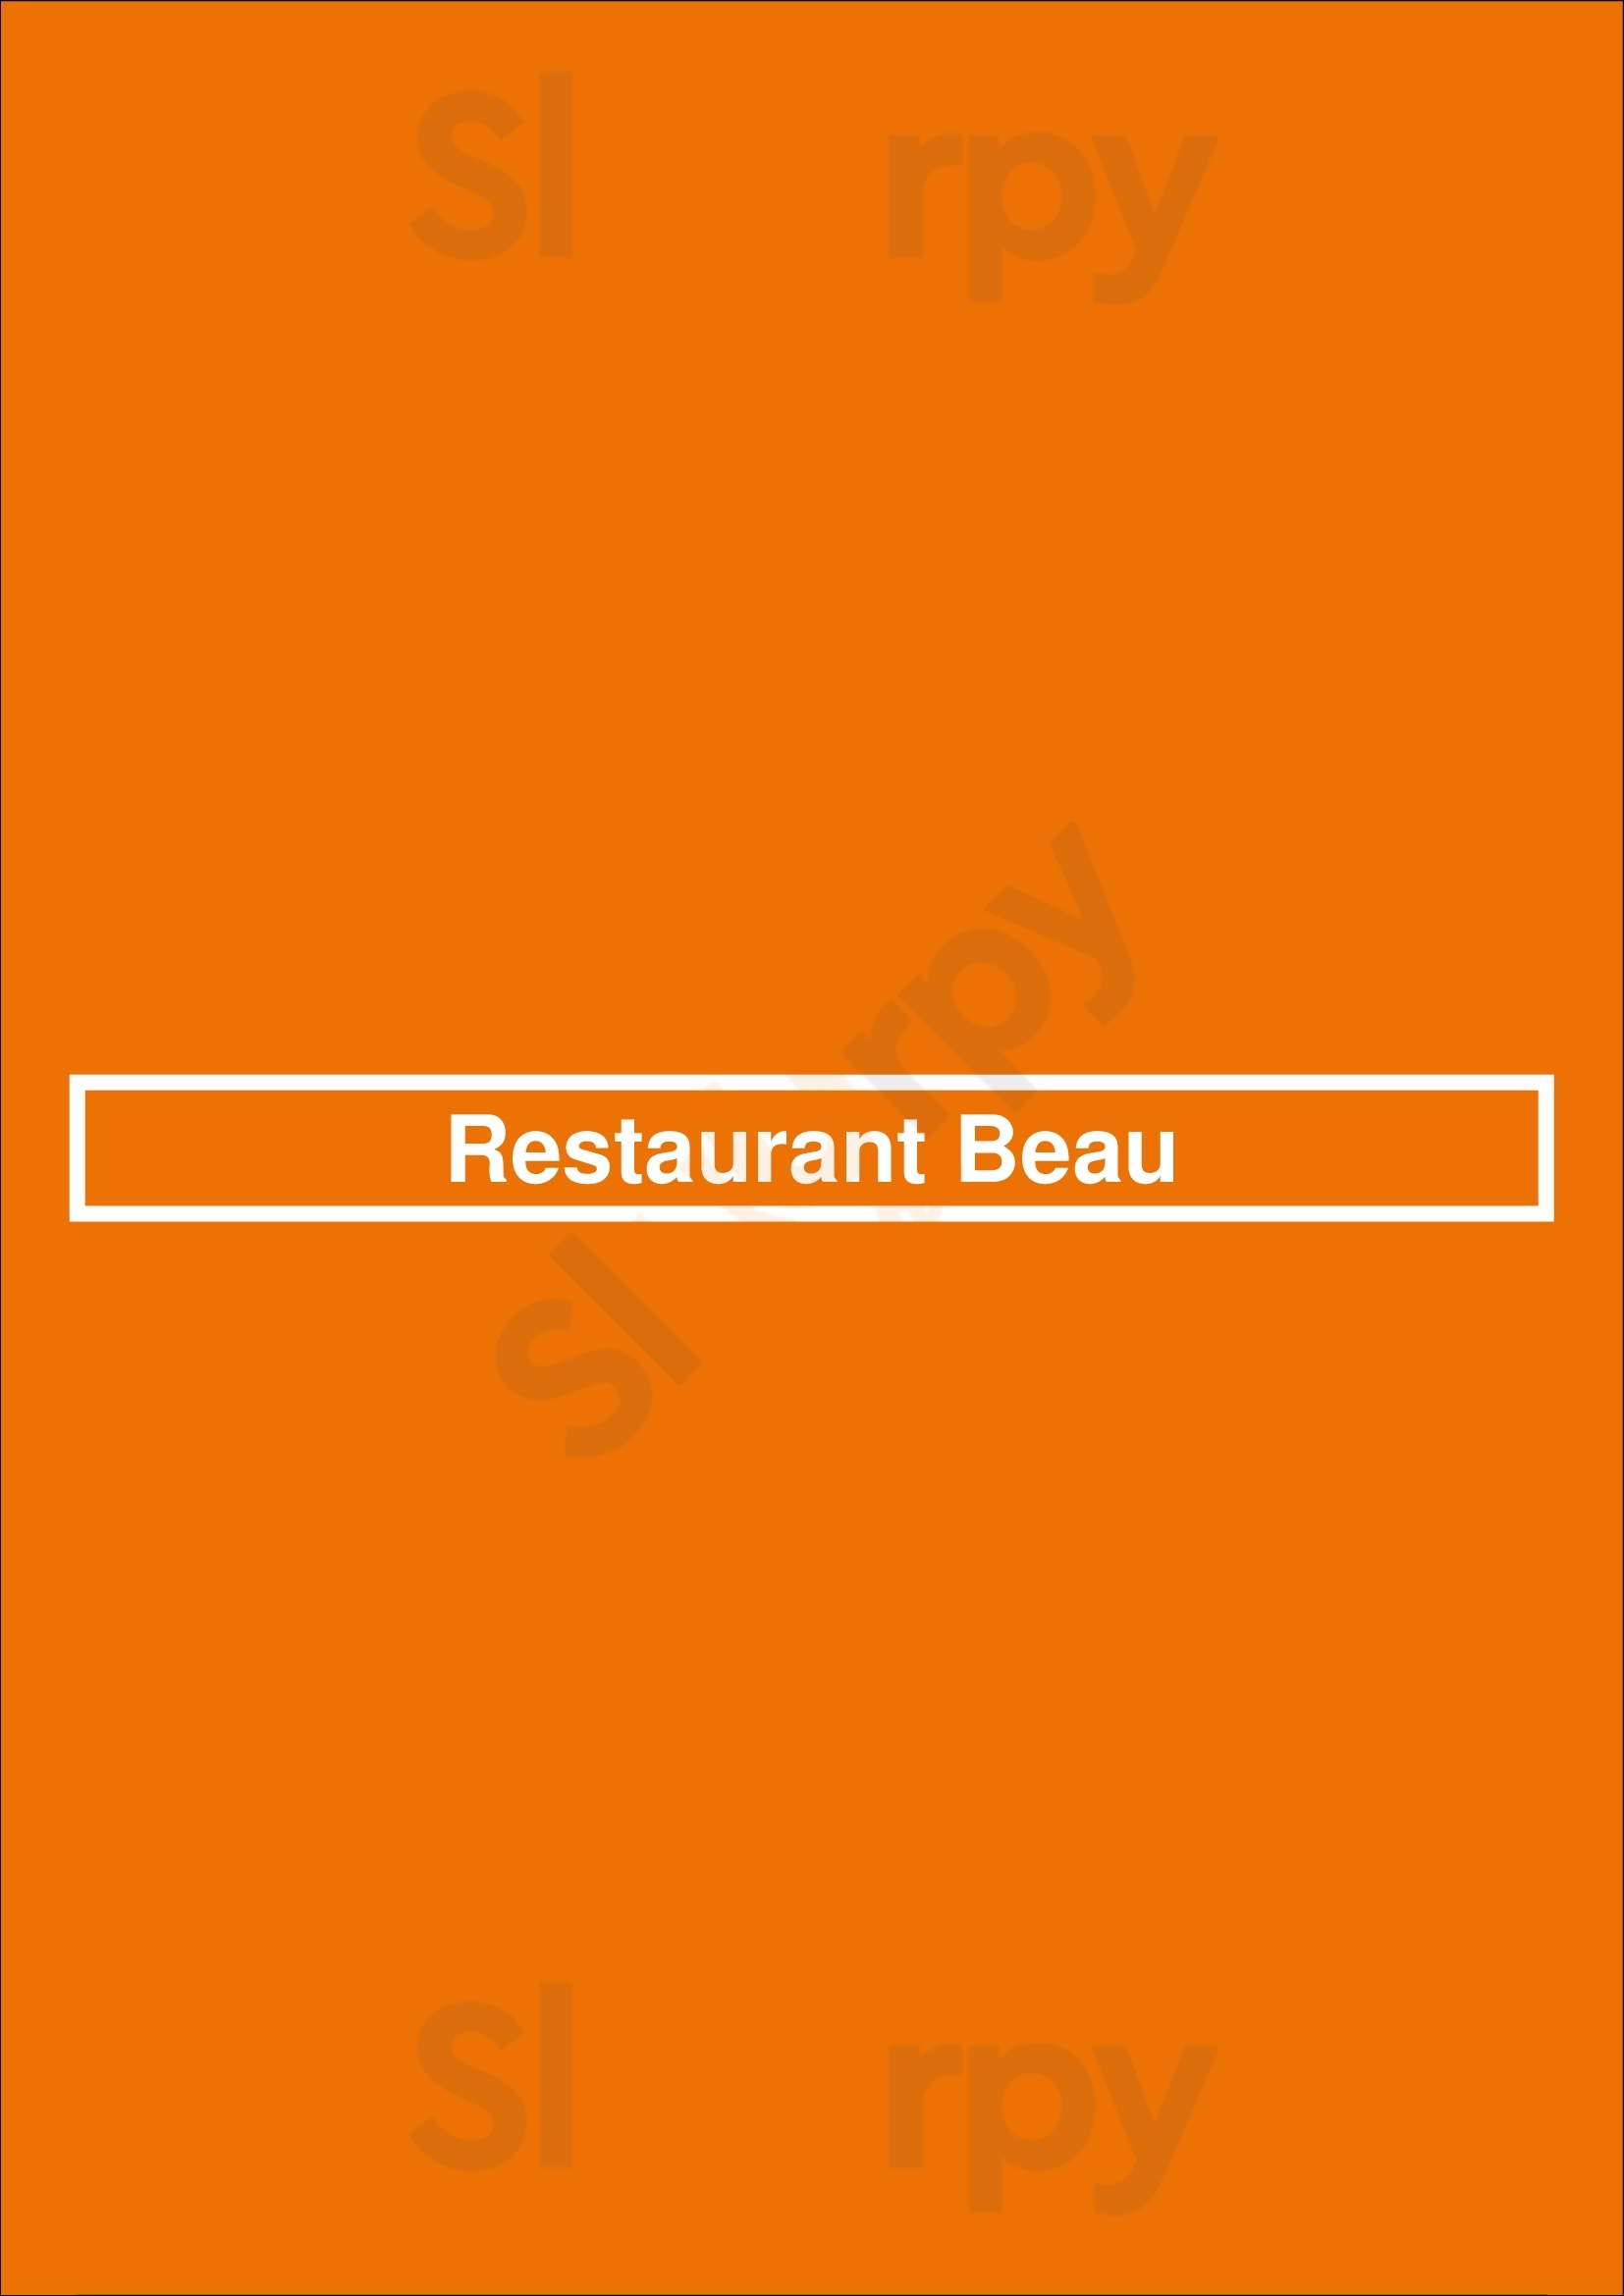 Restaurant Beau Wageningen Menu - 1